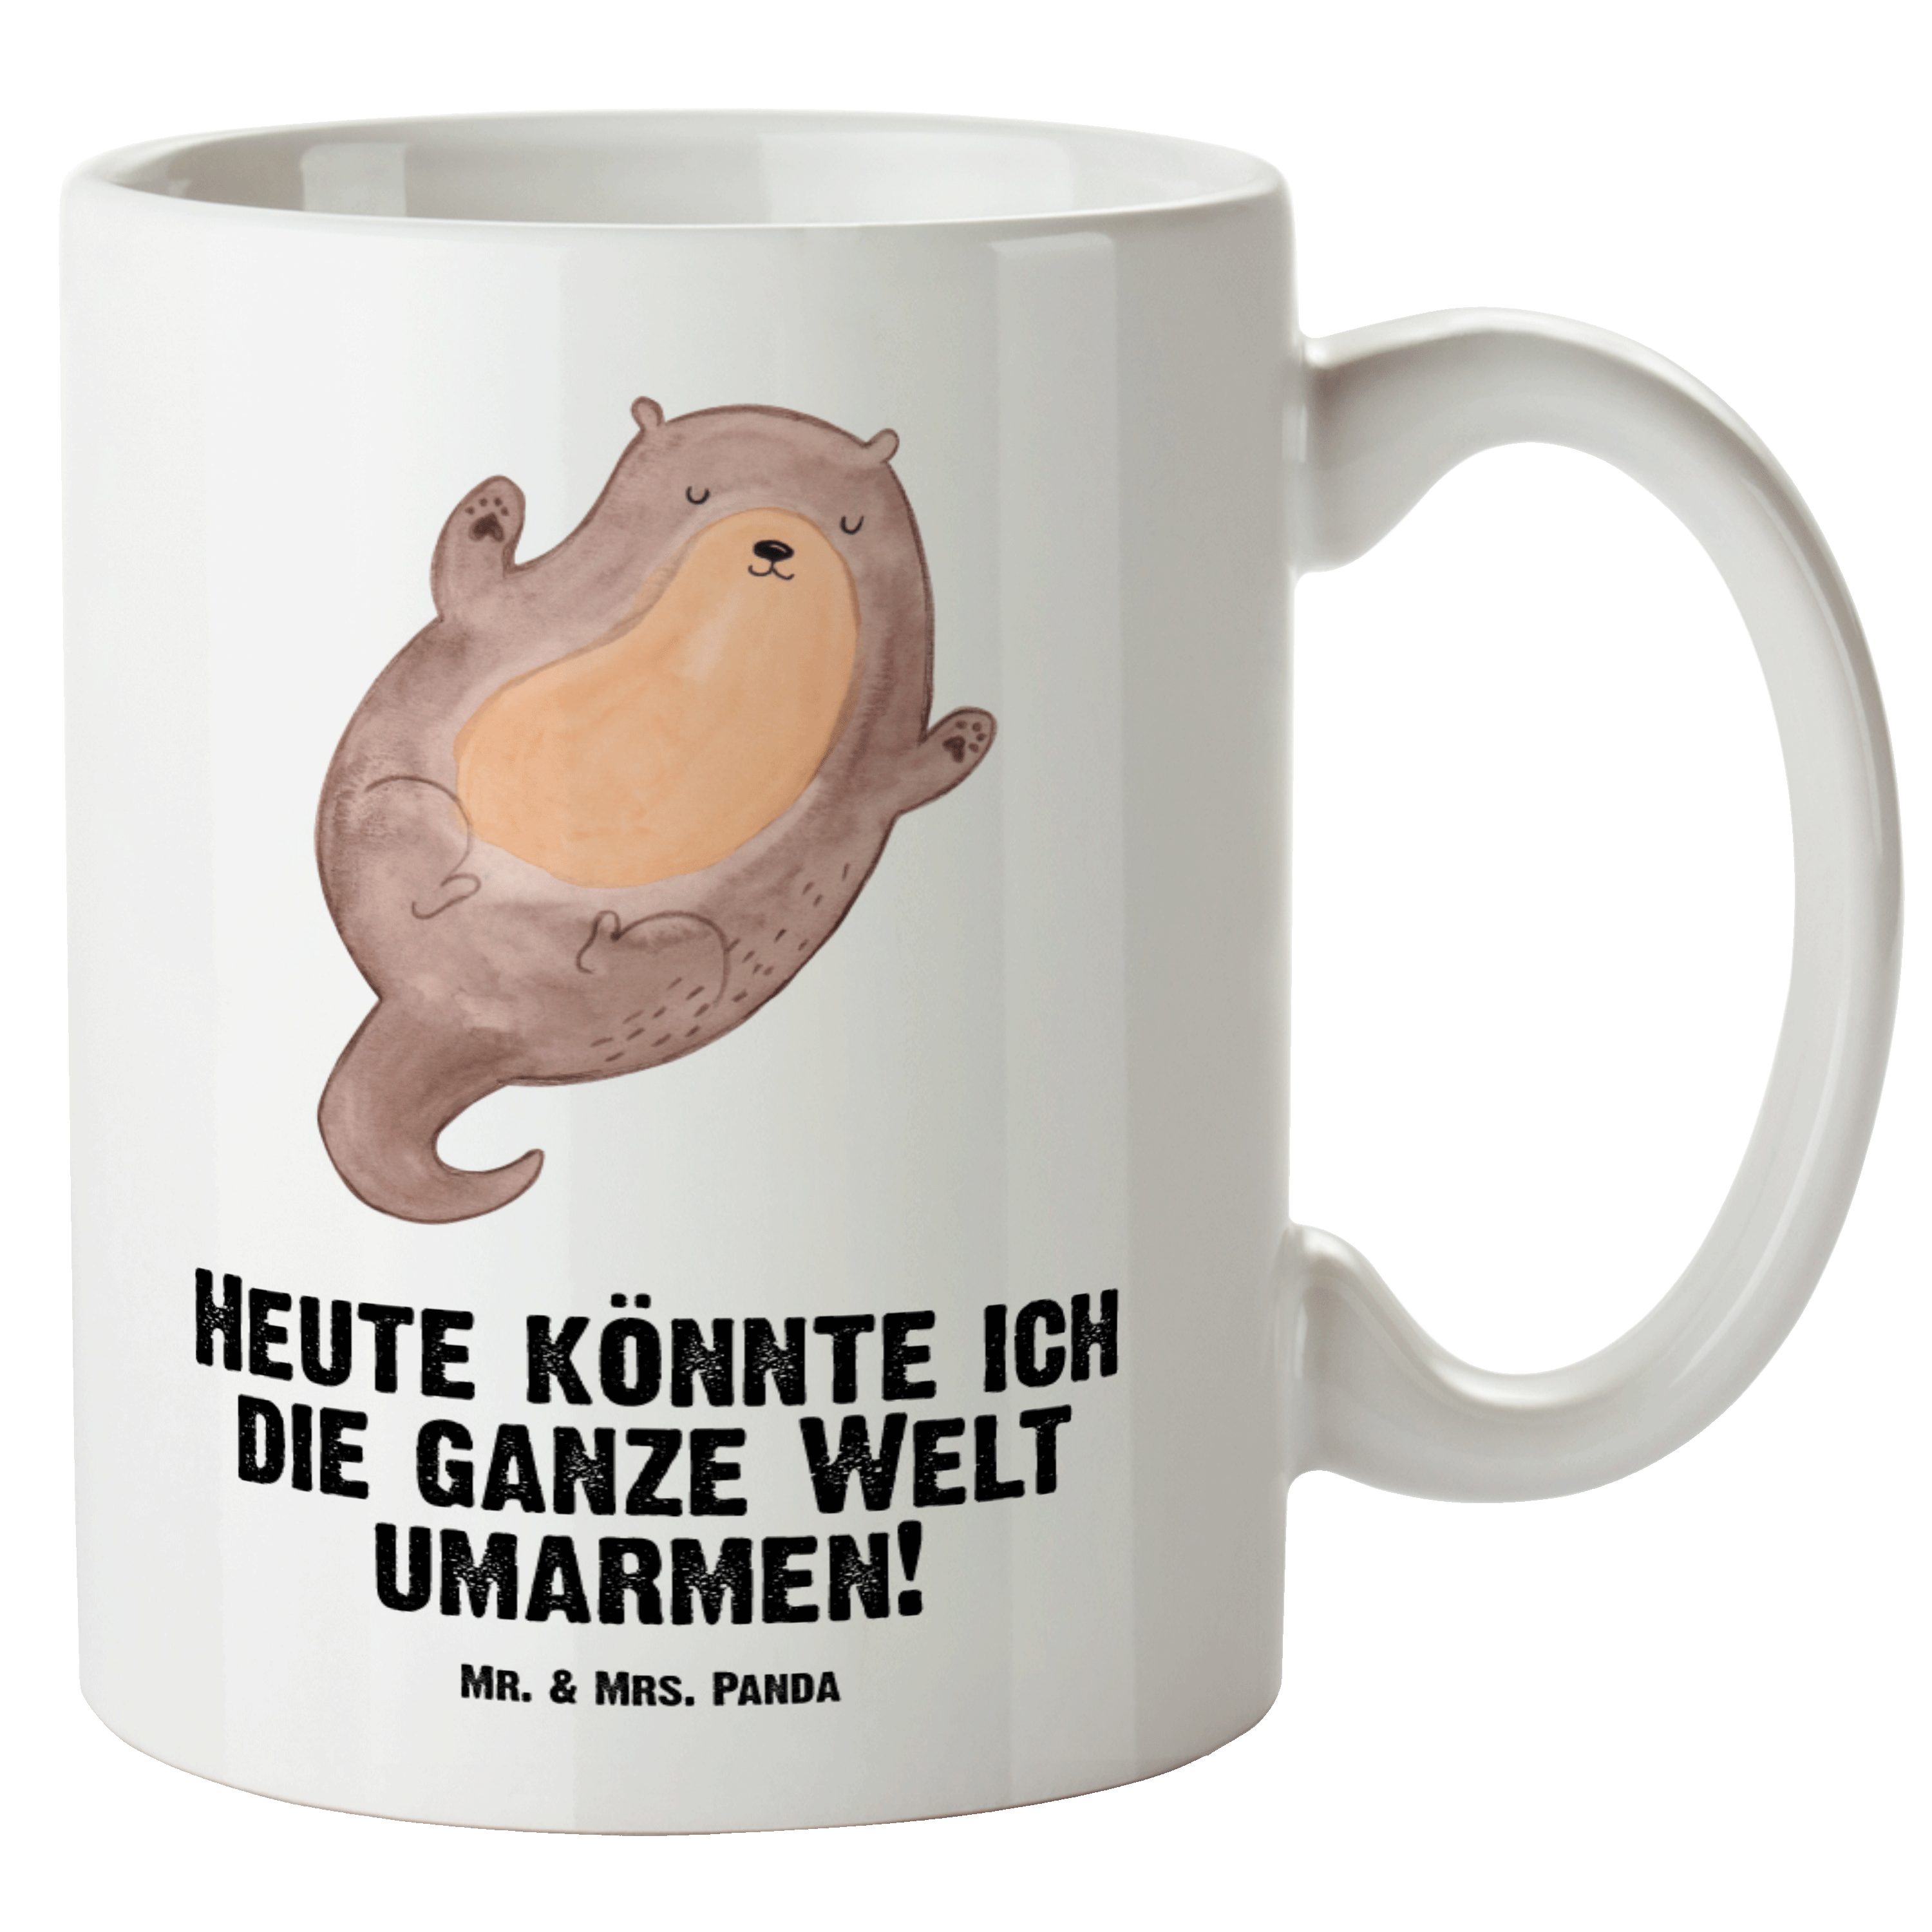 Mr. & Mrs. Panda Tasse Otter Umarmen - Weiß - Geschenk, Otter Seeotter See Otter, XL Becher, XL Tasse Keramik